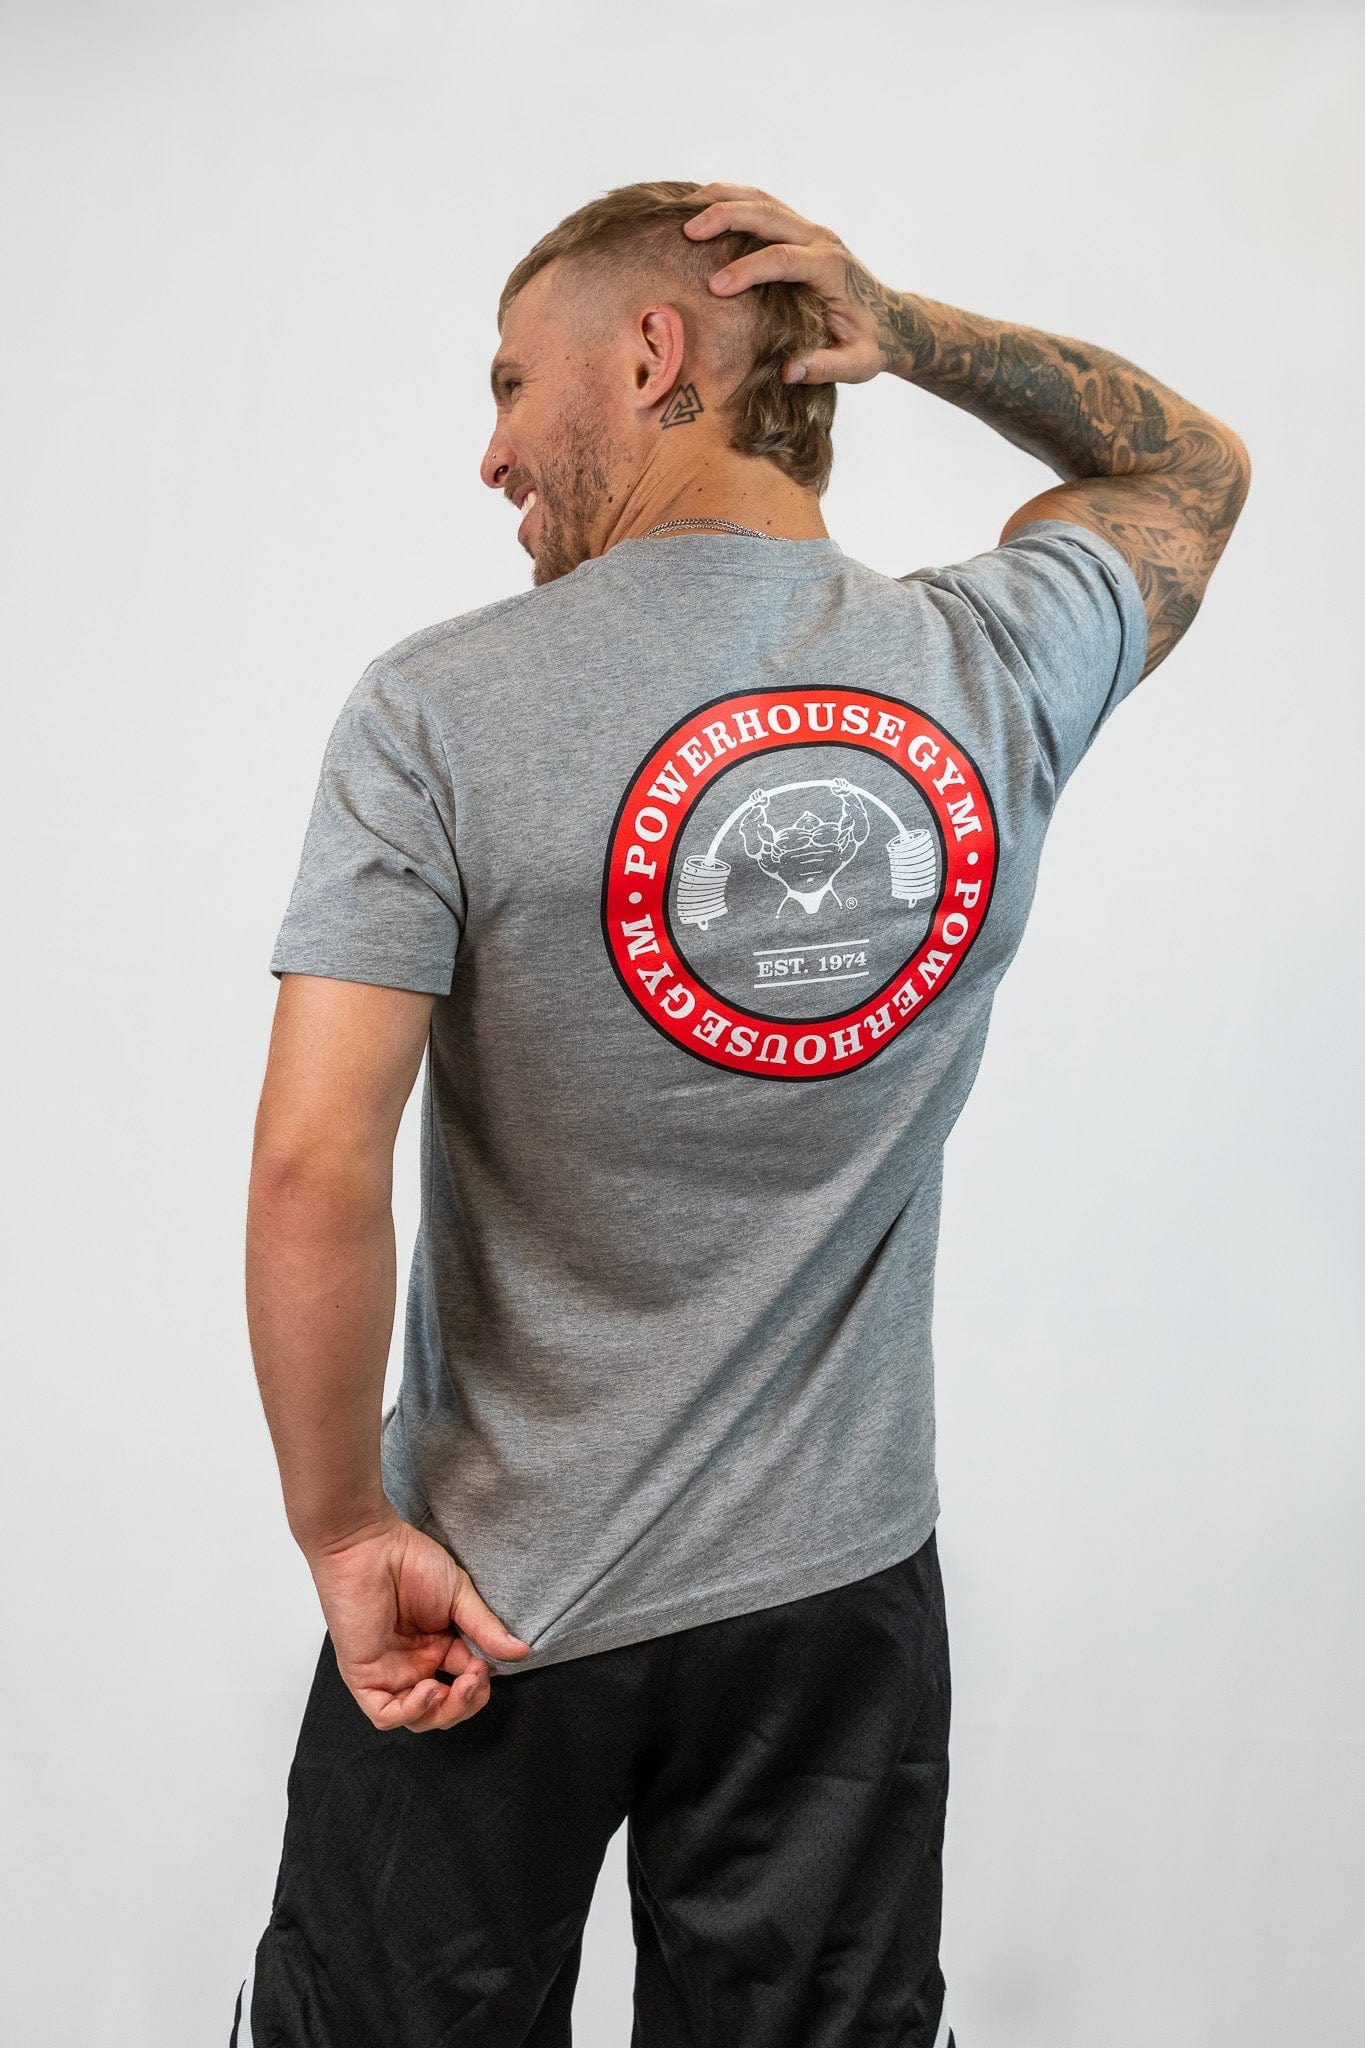 Powerhouse Gym Pro Shop T-Shirt PHG Edition Grey/ Red